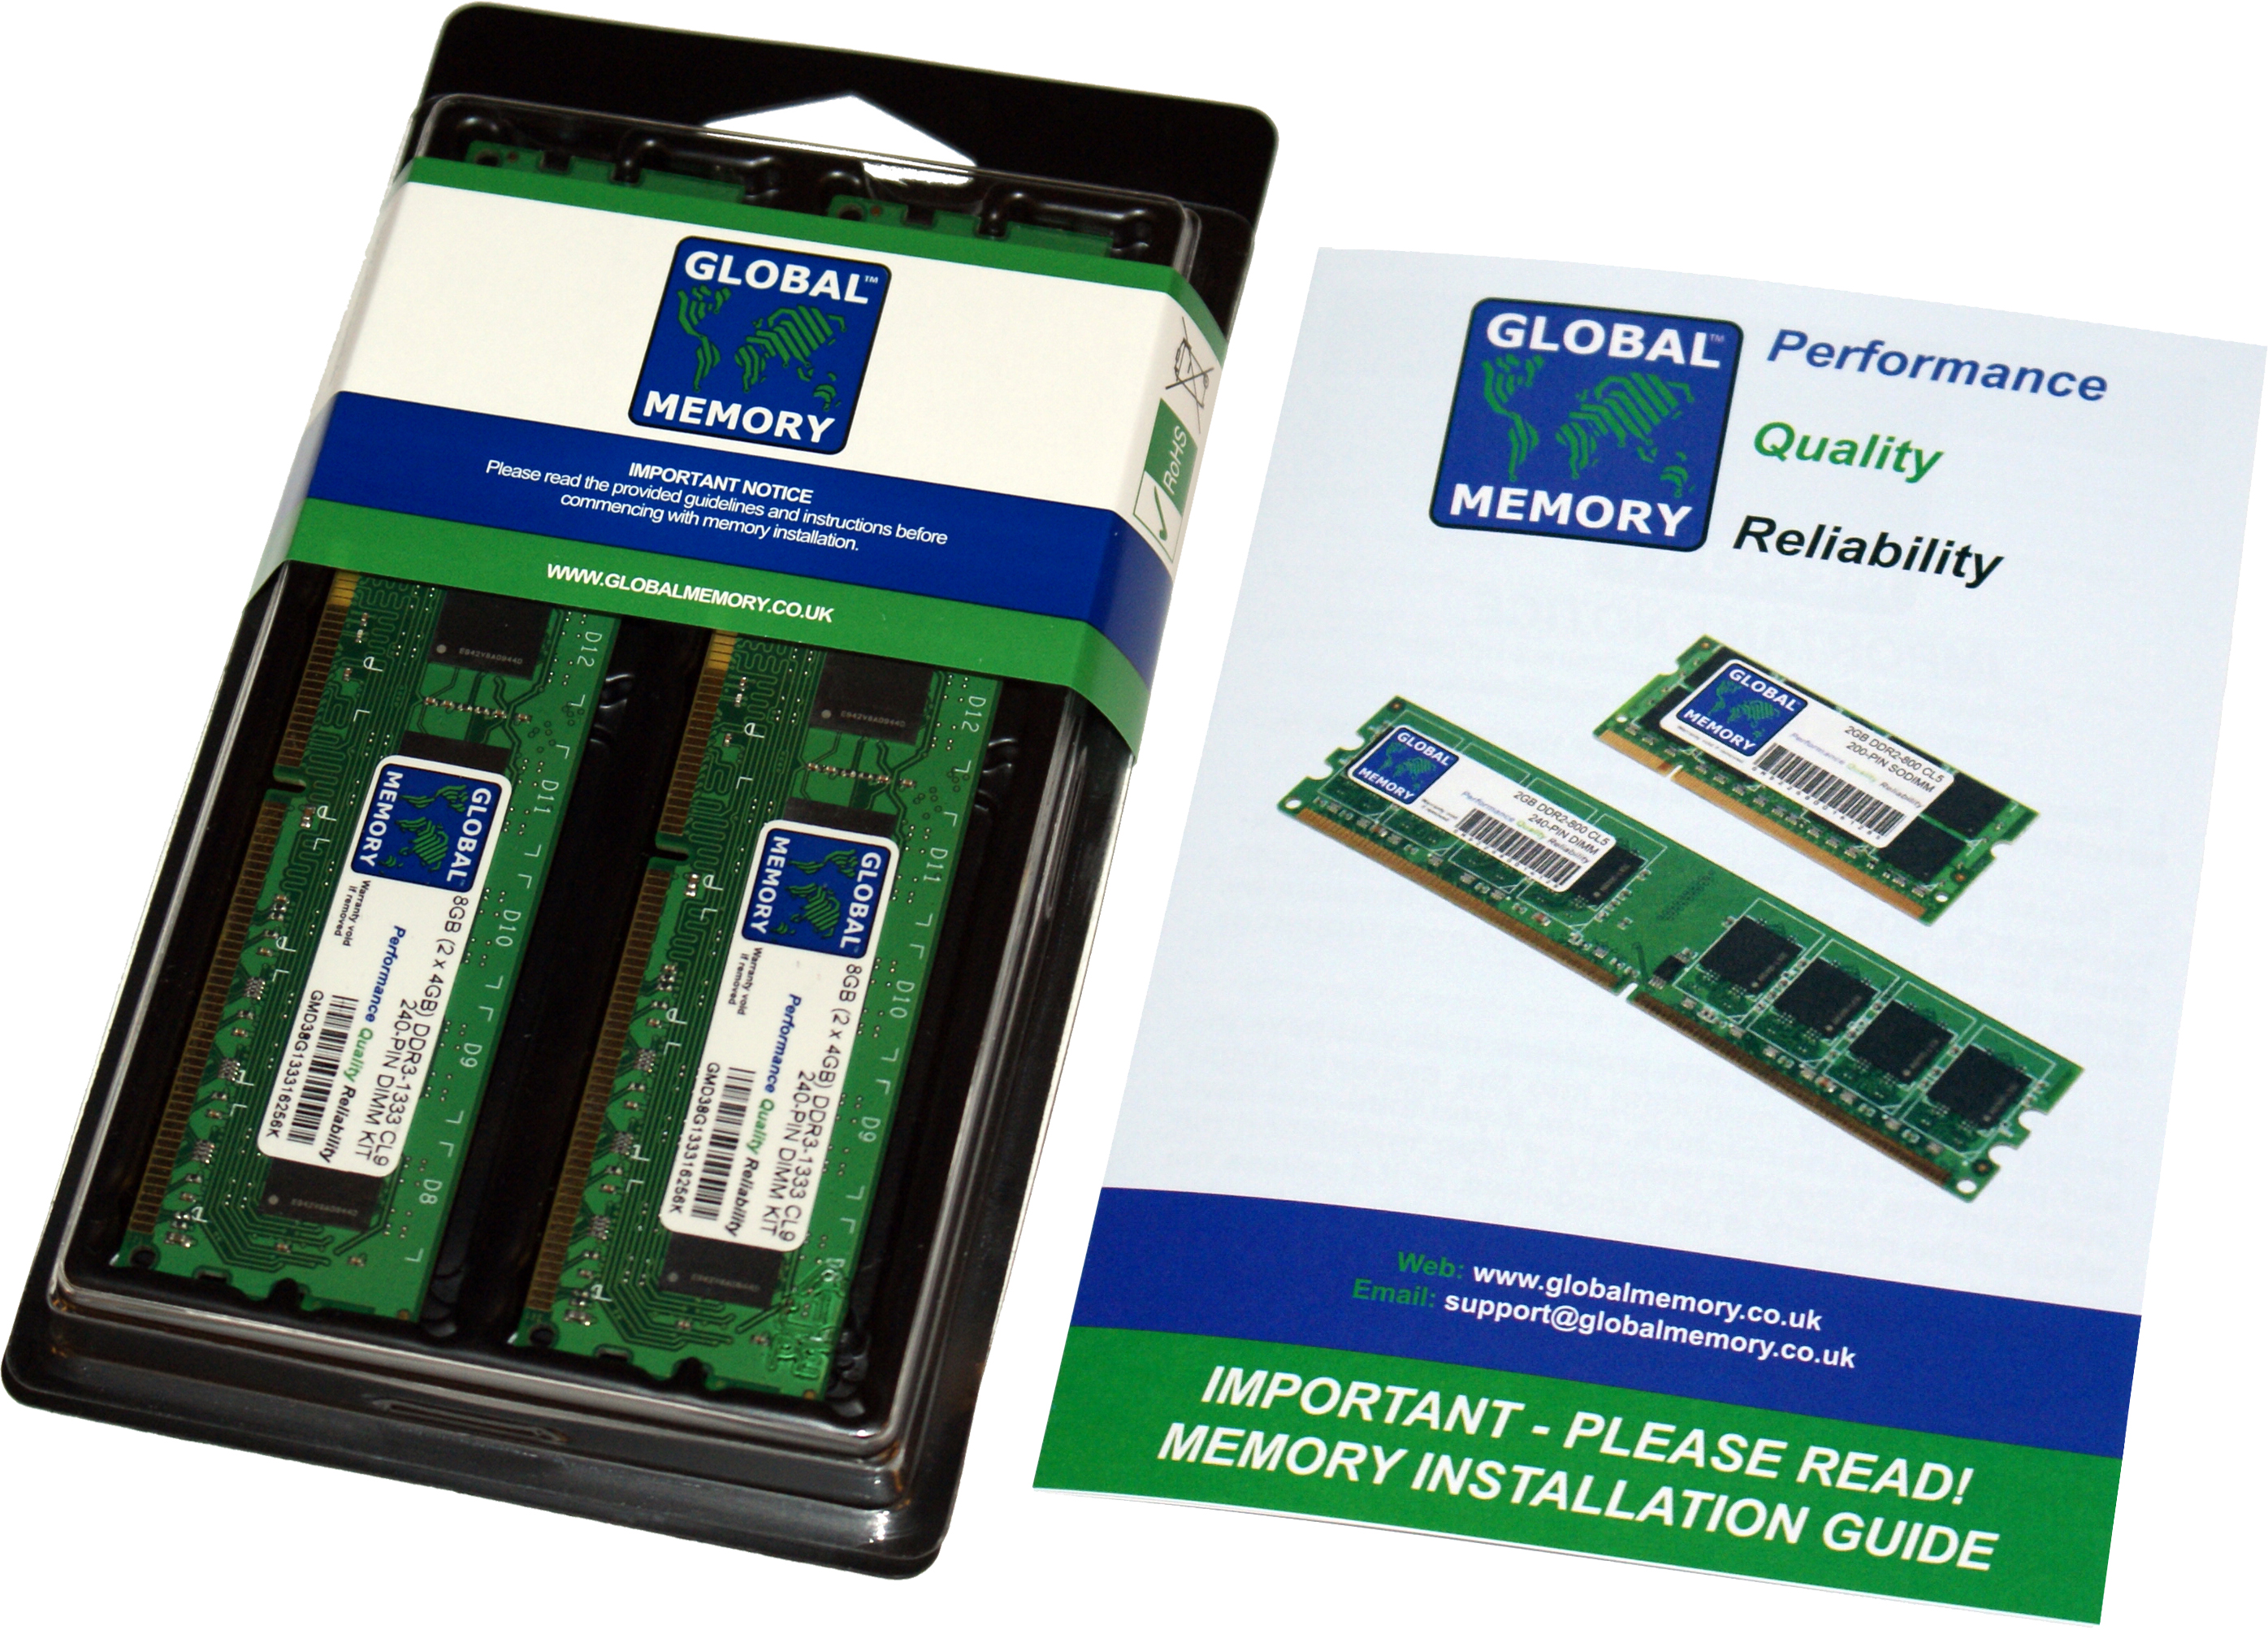 16GB (2 x 8GB) DDR4 2400MHz PC4-19200 288-PIN DIMM MEMORY RAM KIT FOR PC DESKTOPS/MOTHERBOARDS